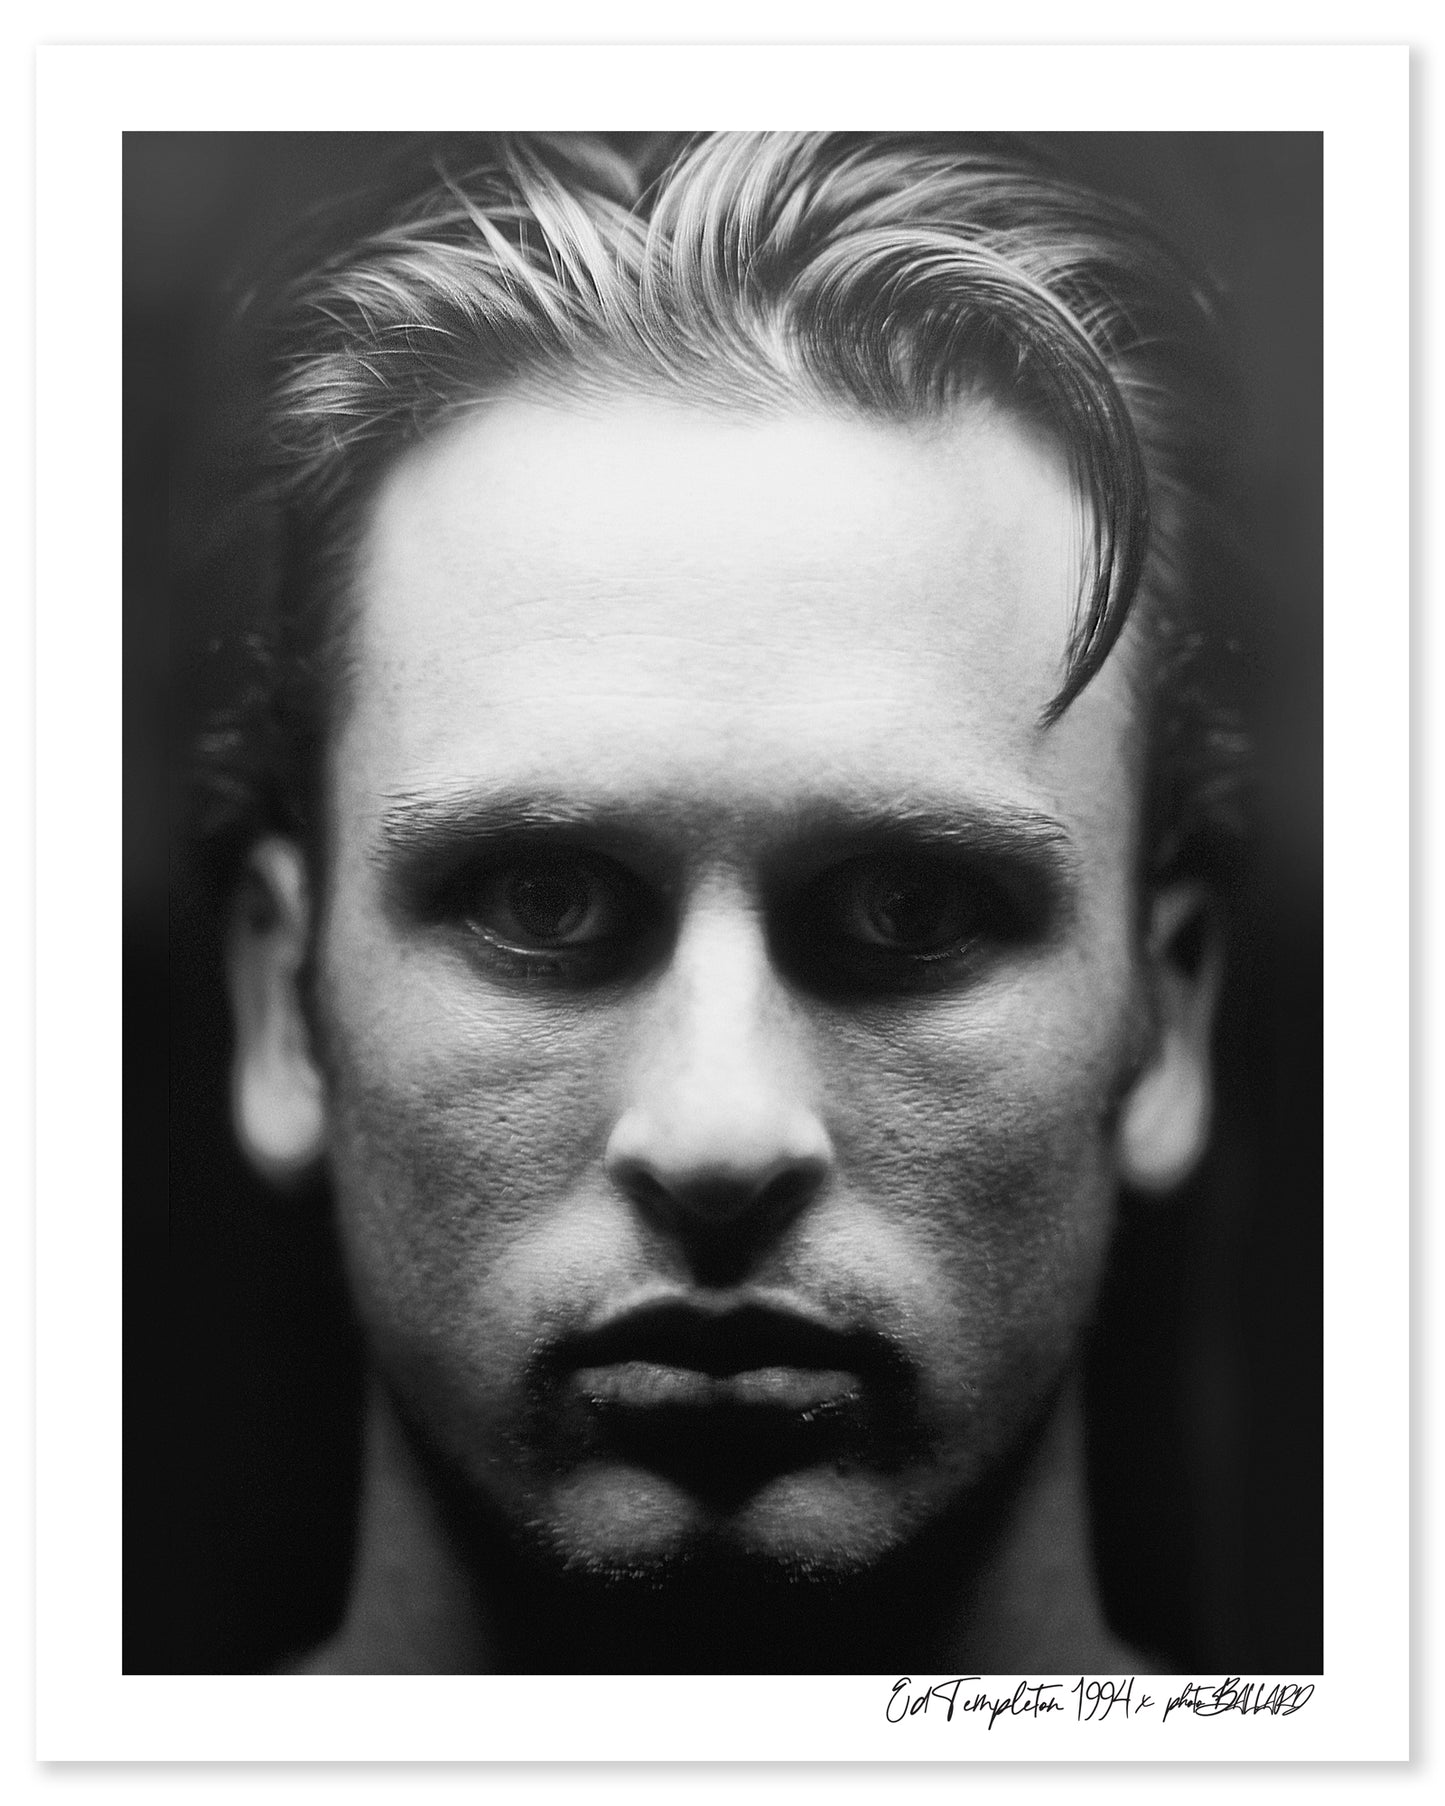 ED TEMPLETON 1994 x photoBALLARD